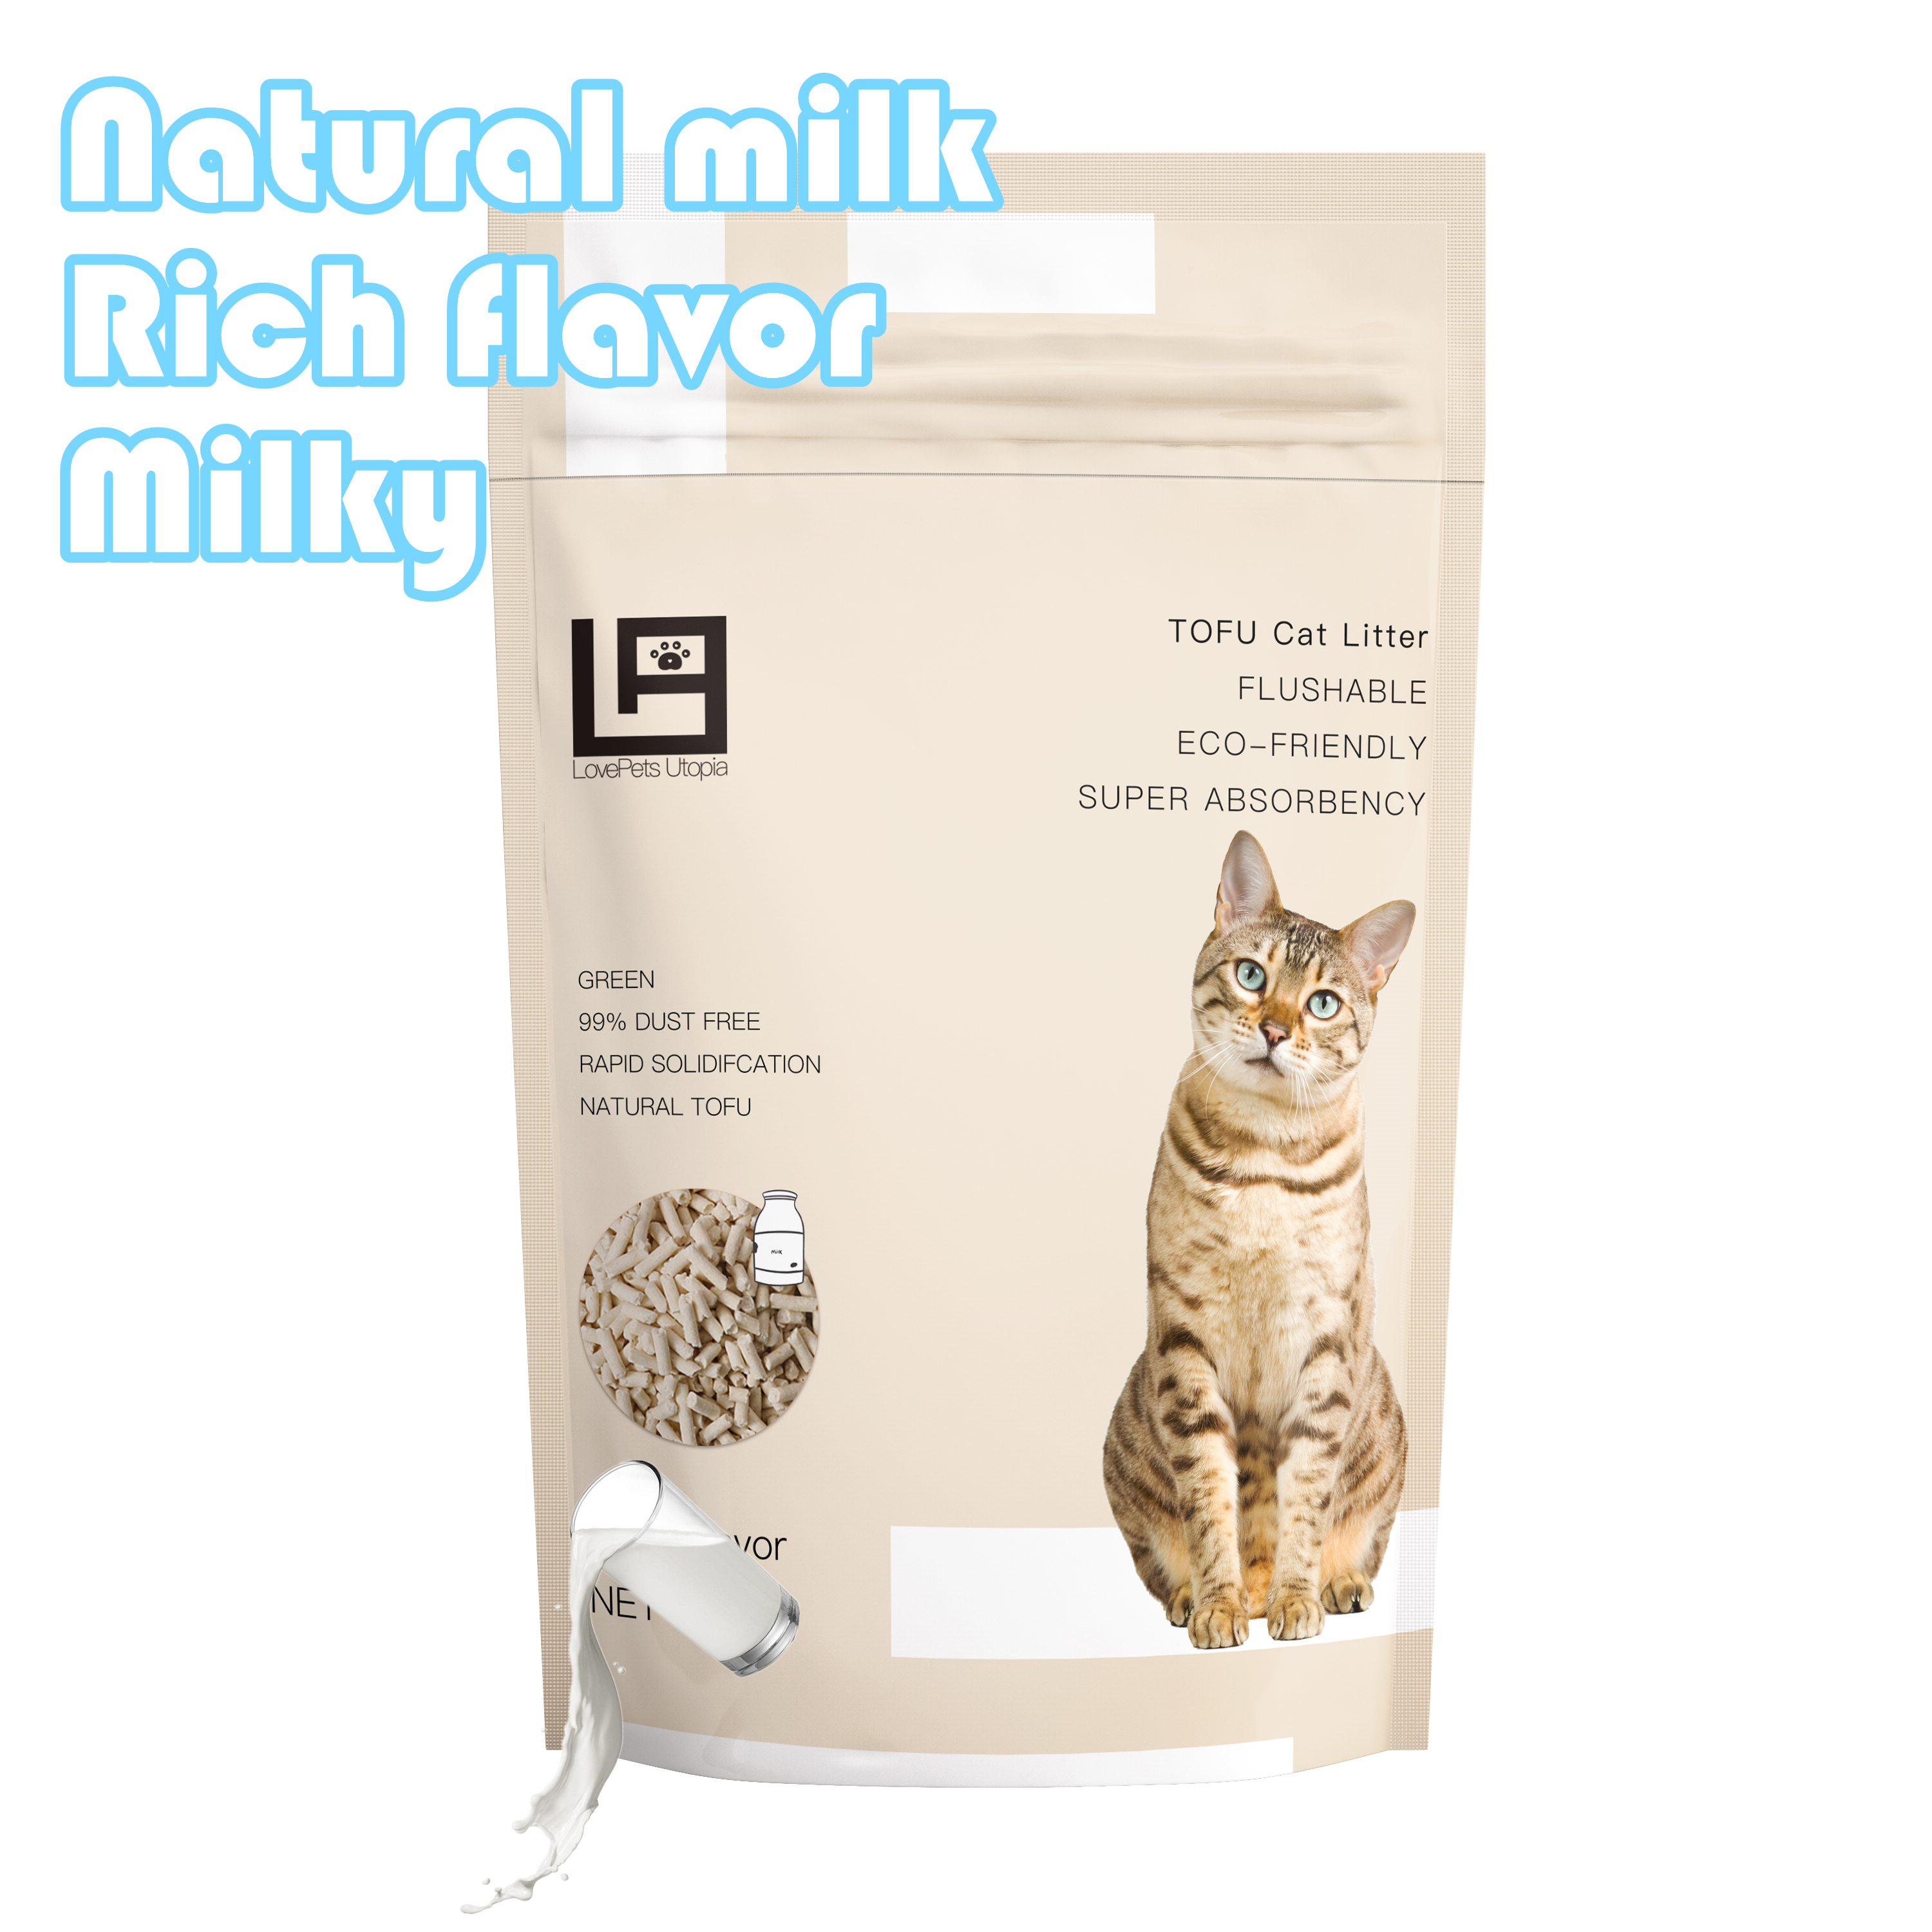 Love Pets Utopia Natural Milk Flavor Flushable Tofu Cat Litter Featured Image